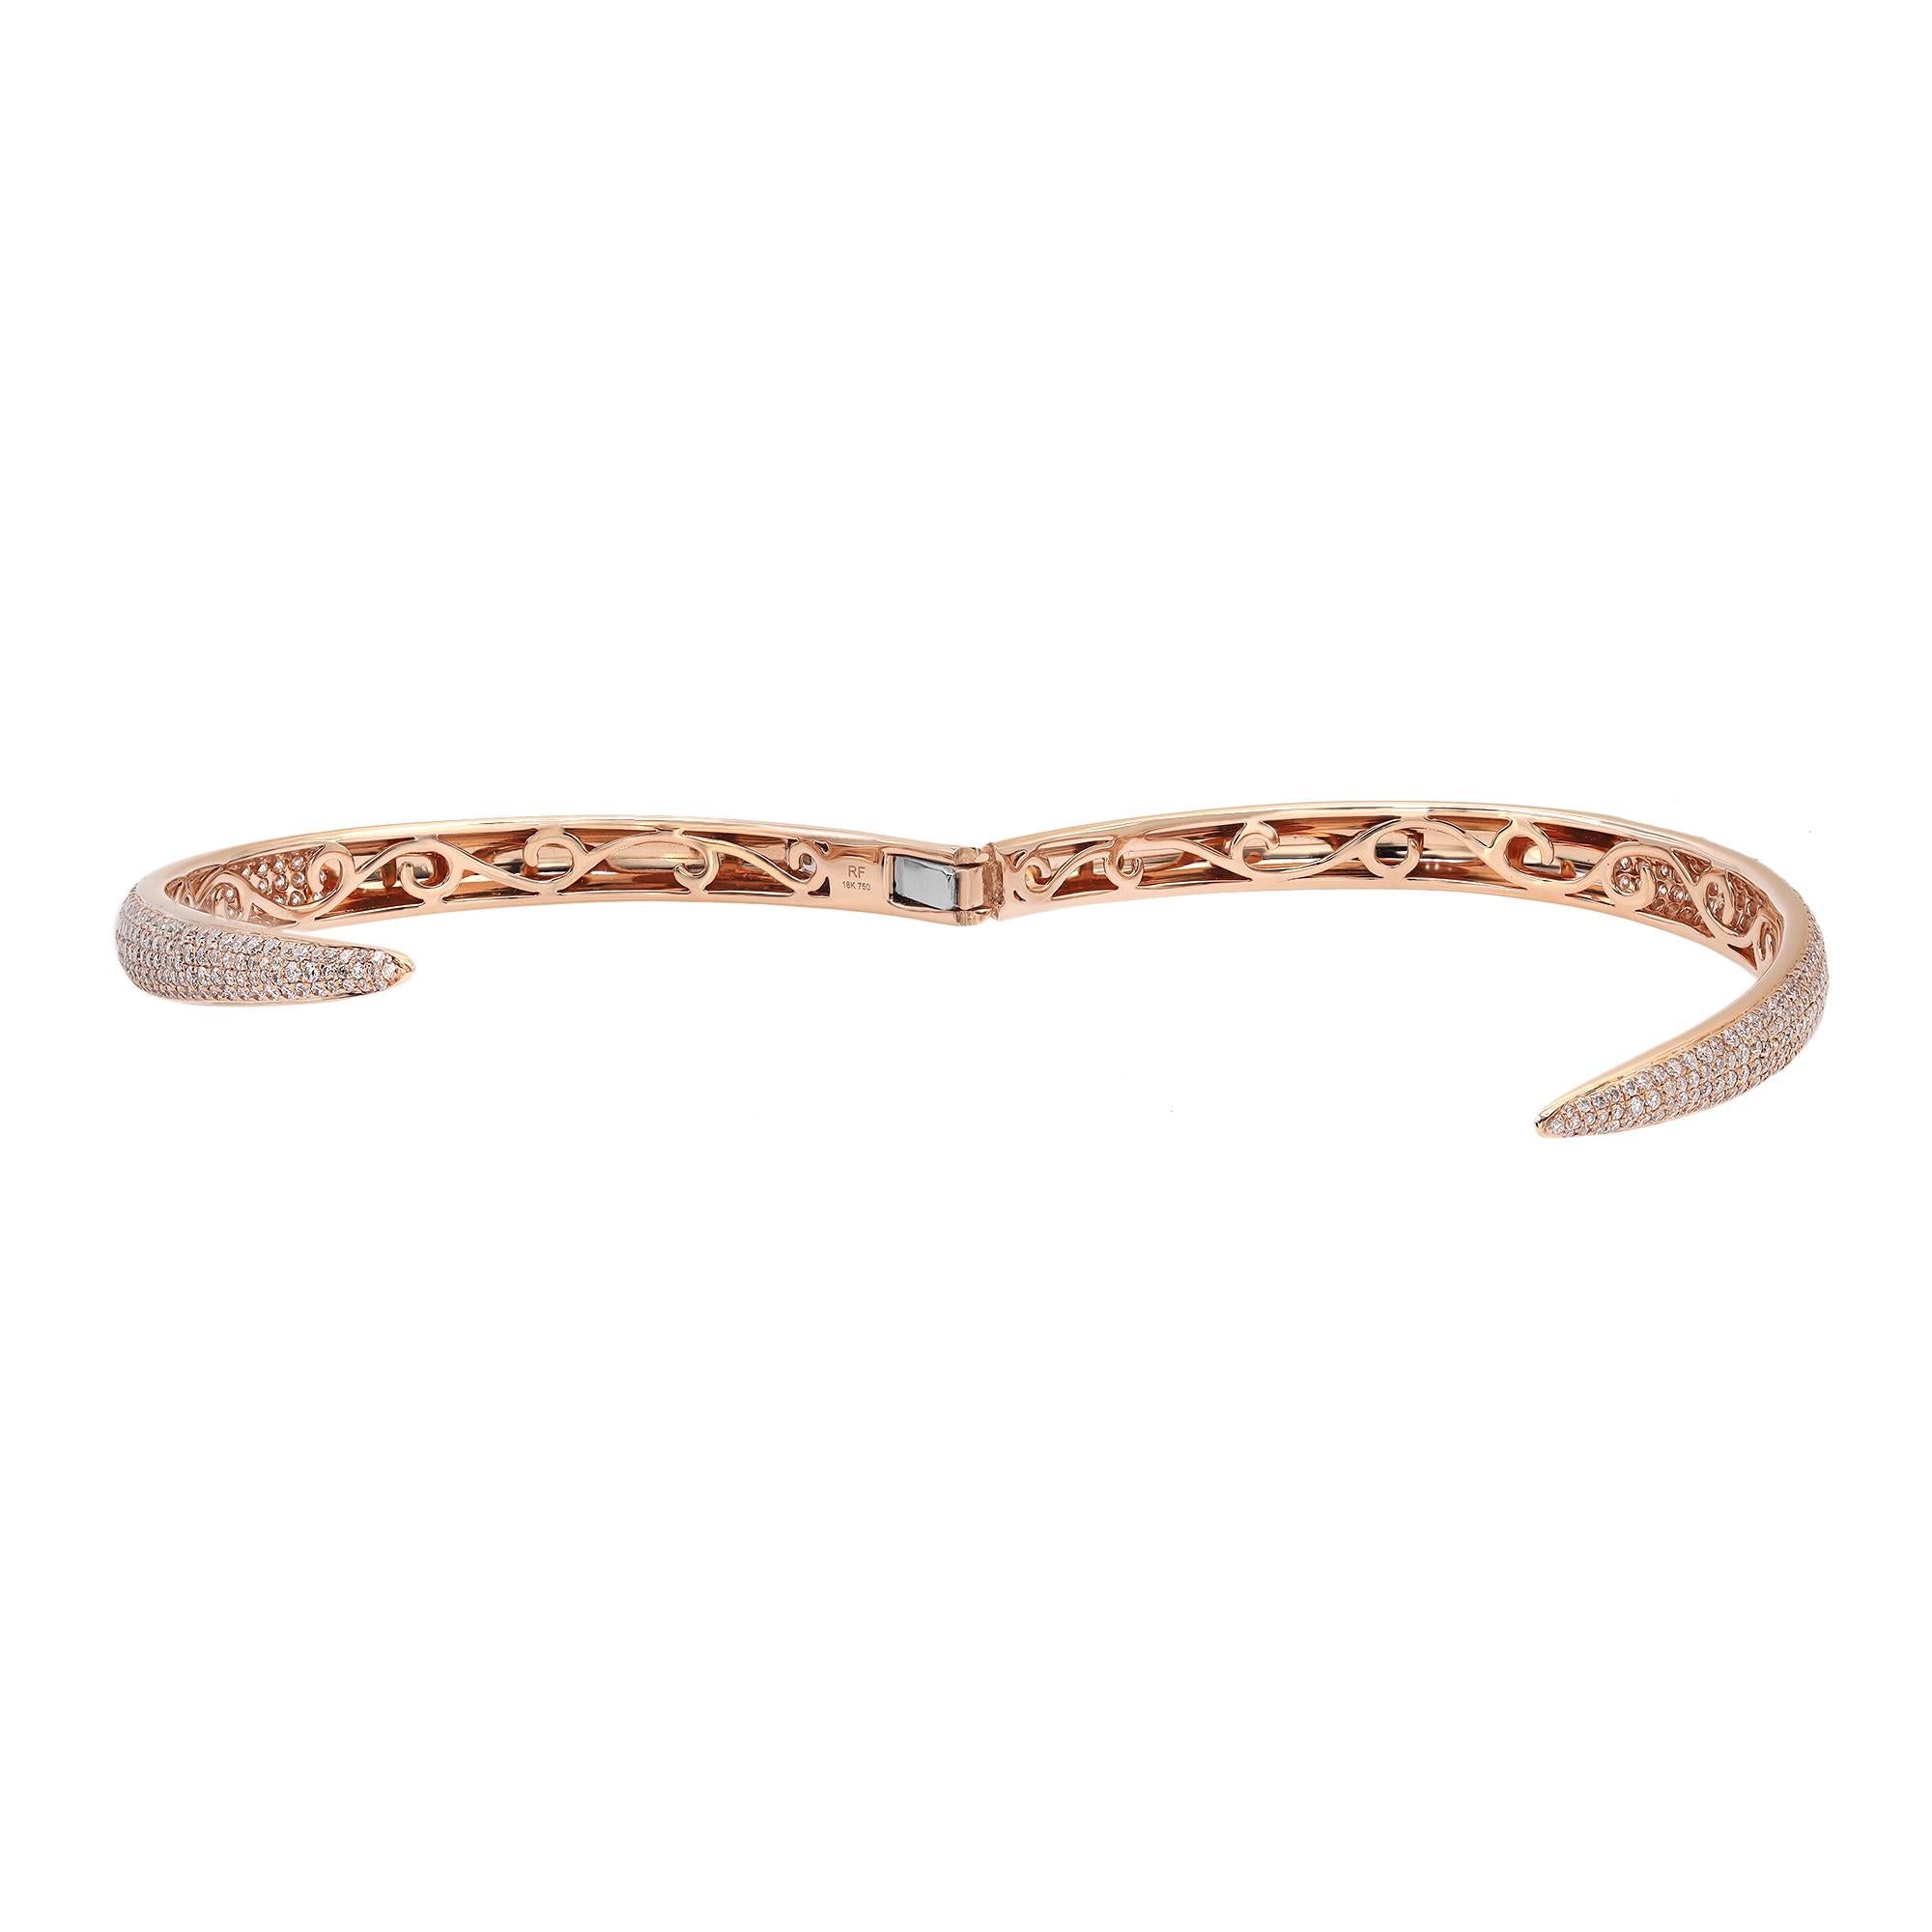 Modern Rachel Koen Pave Set Round Cut Diamond Bangle Bracelet 18K Rose Gold 2.68cttw For Sale